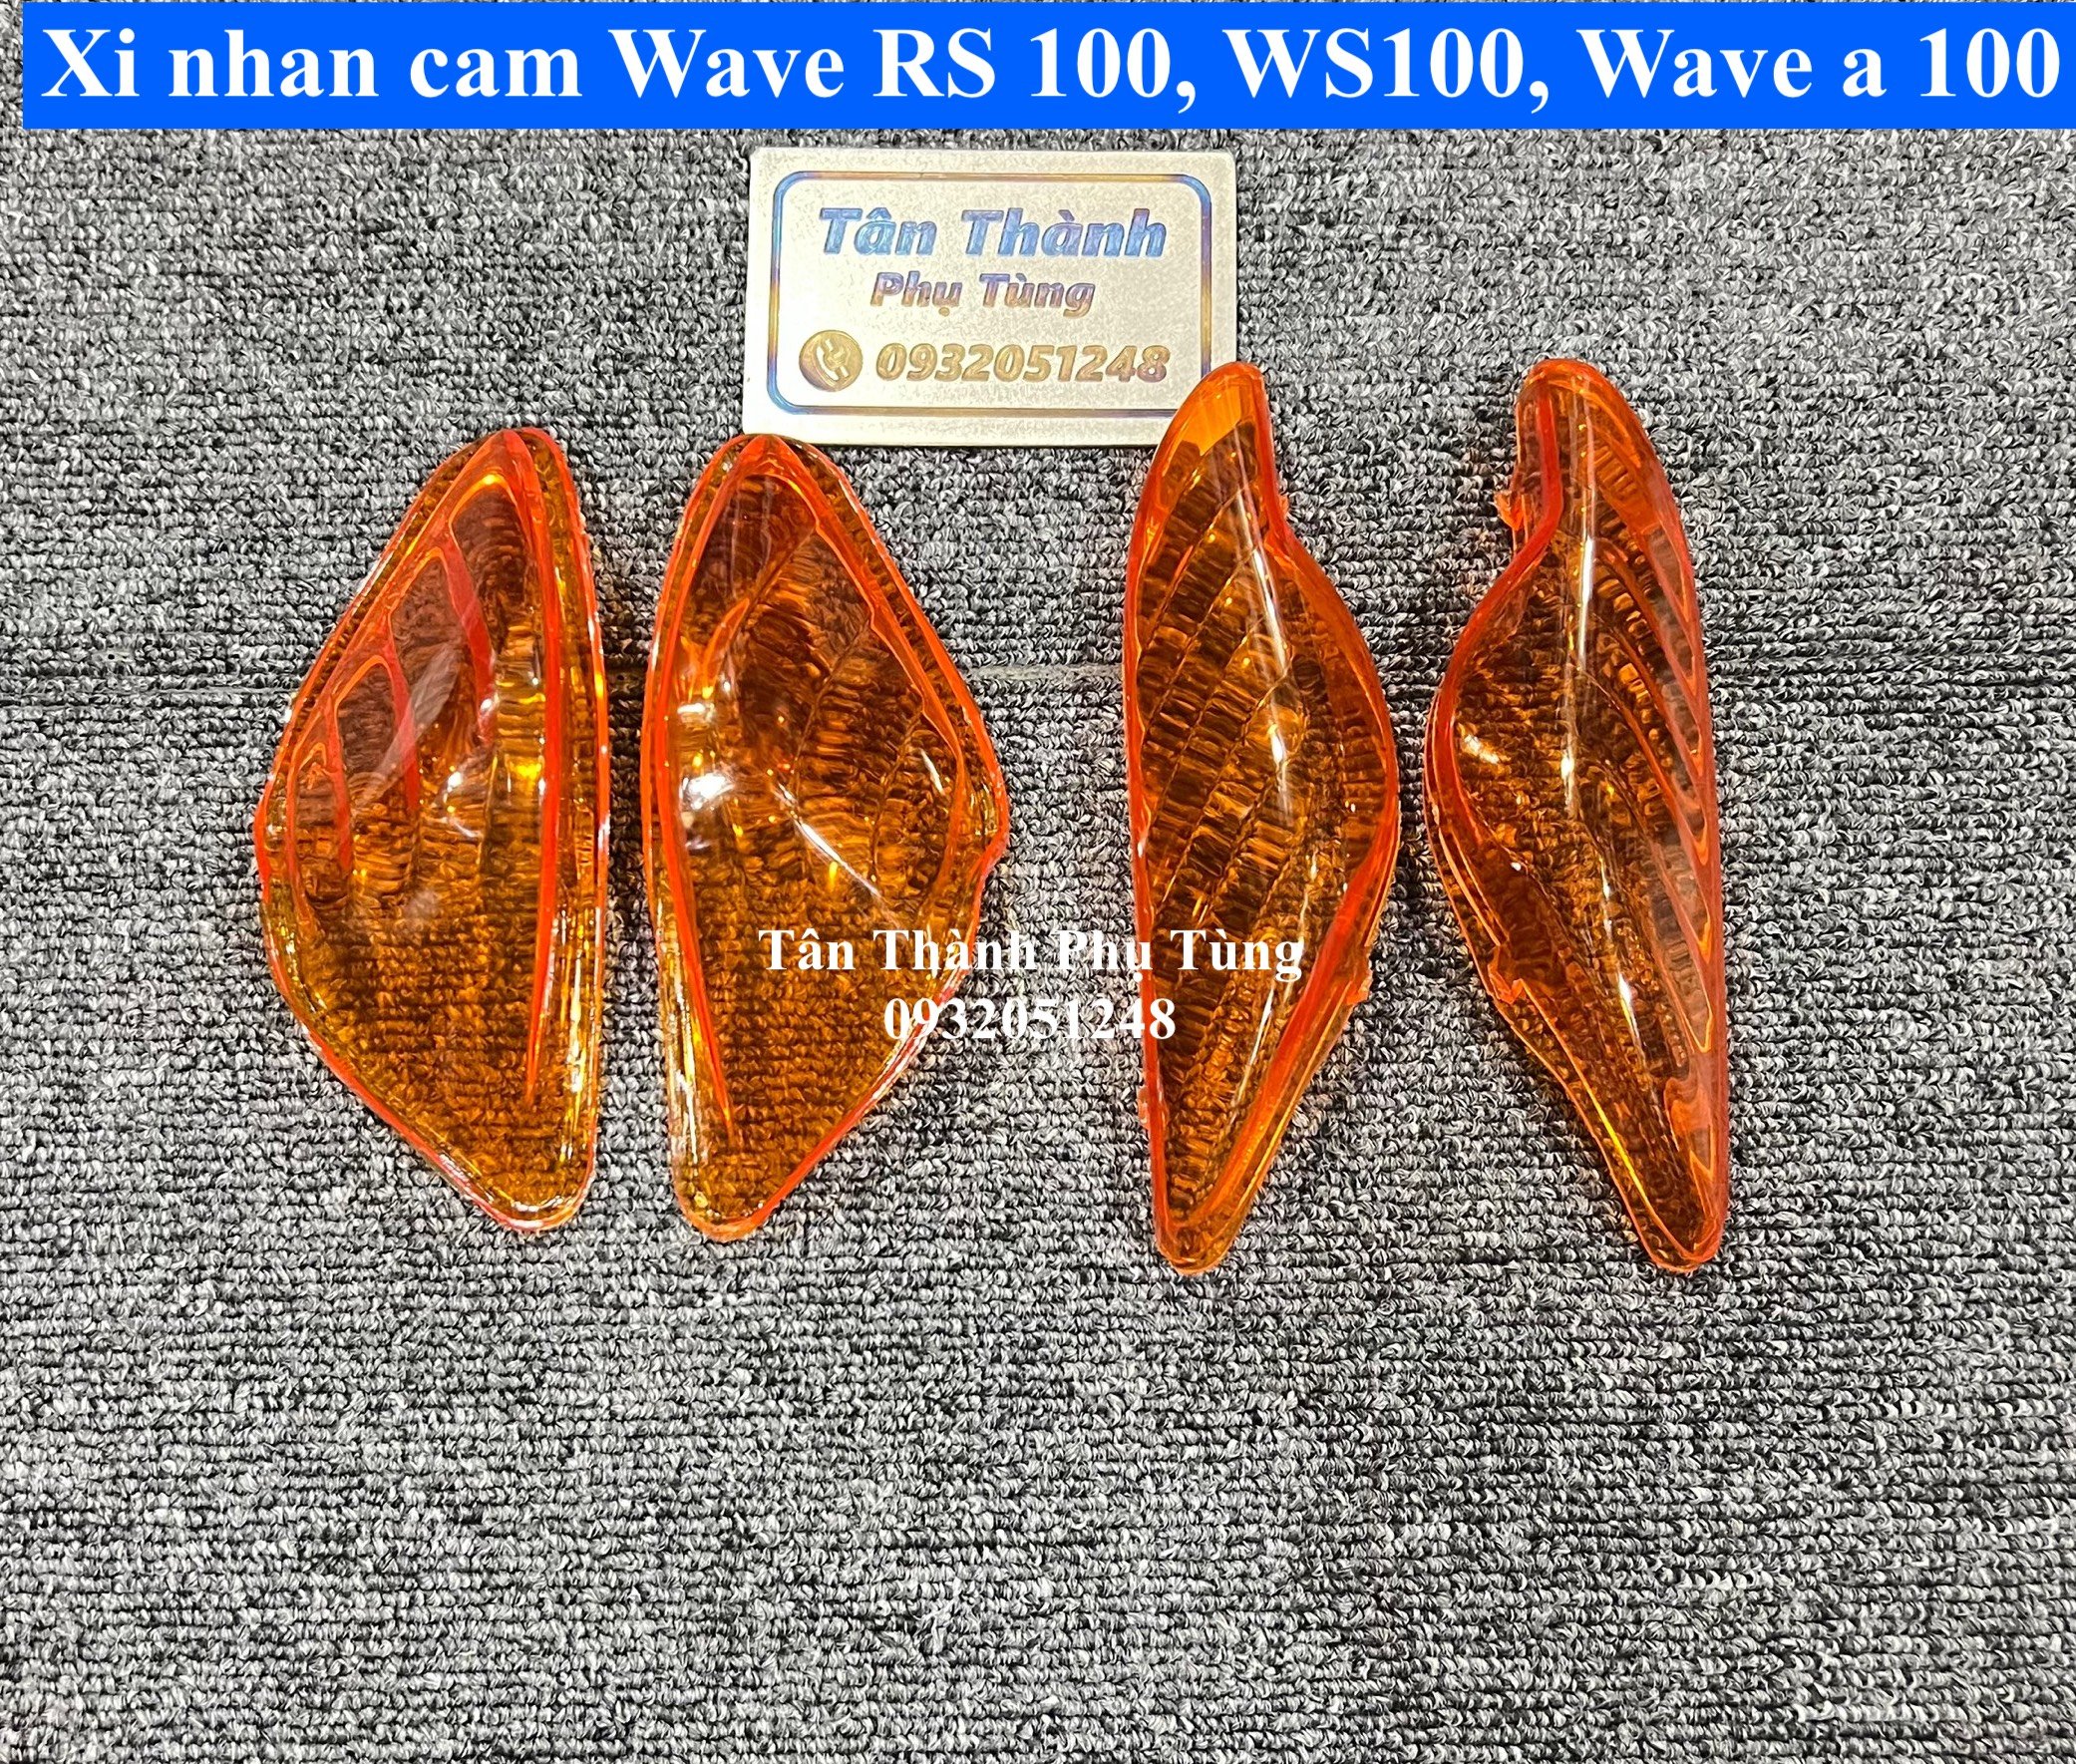 Xi nhan cam dành cho Wave RS 100, Wave a 100, Wave S100 (loại 1)